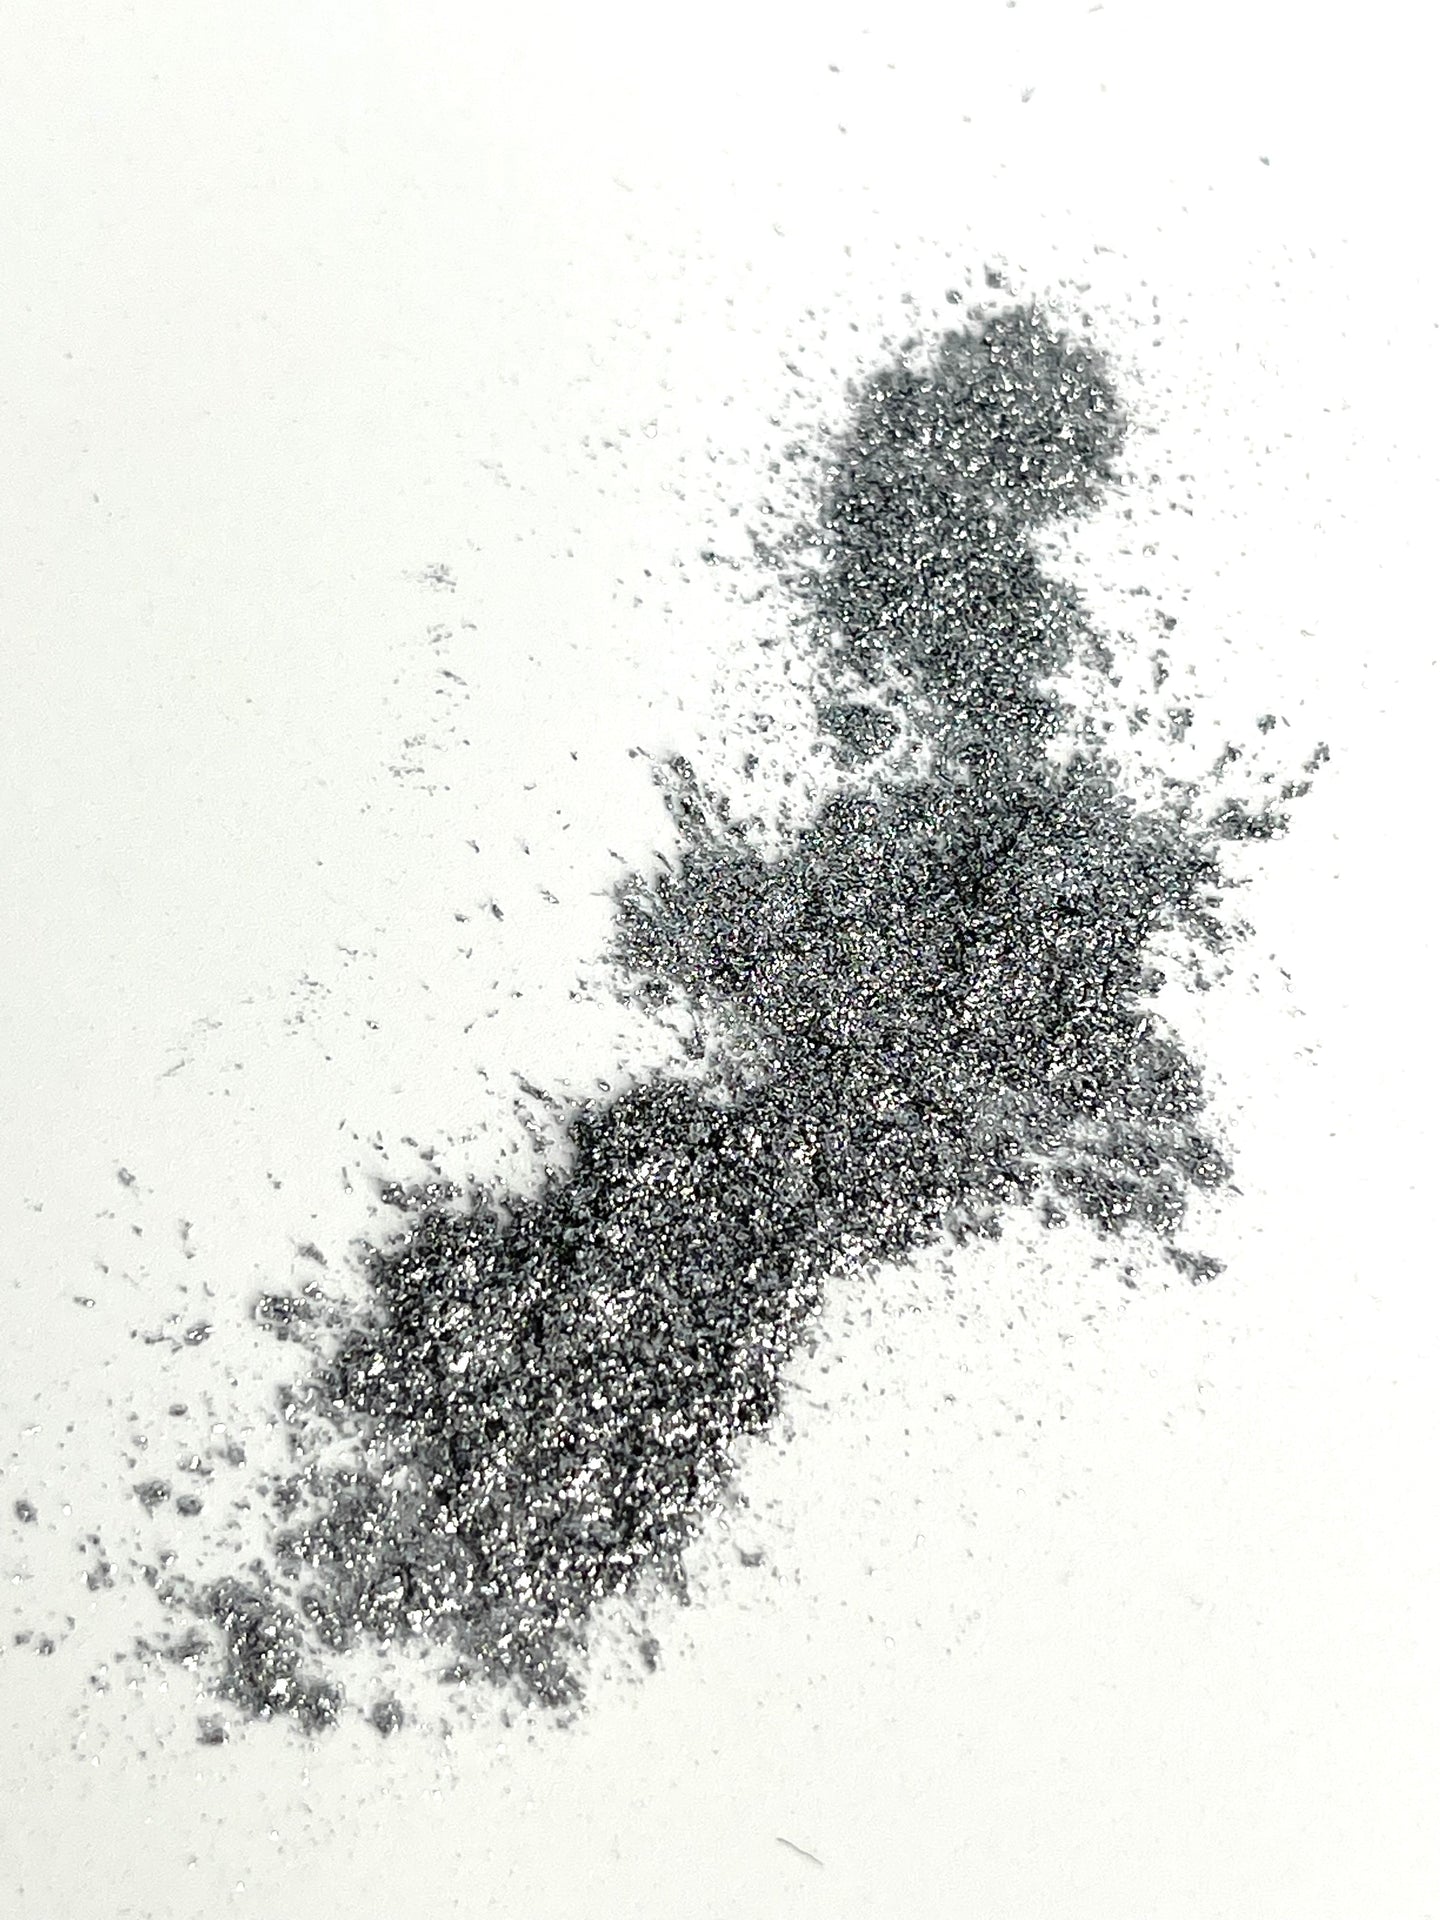 Luxe Powder: Divine Silver